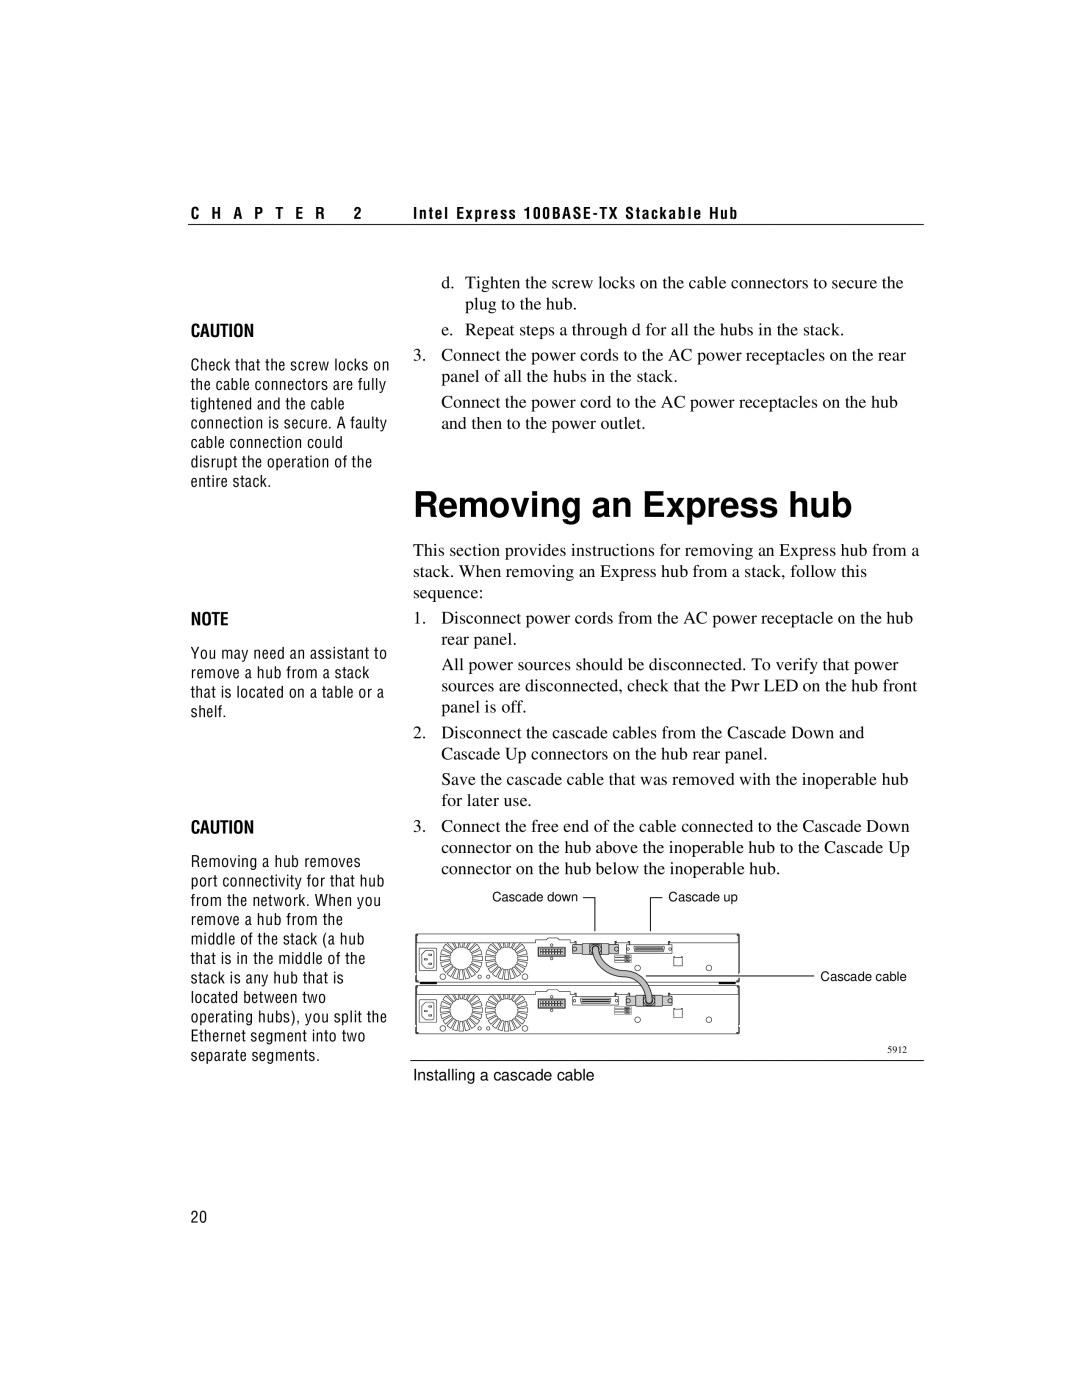 Intel 100BASE-TX manual Removing an Express hub 